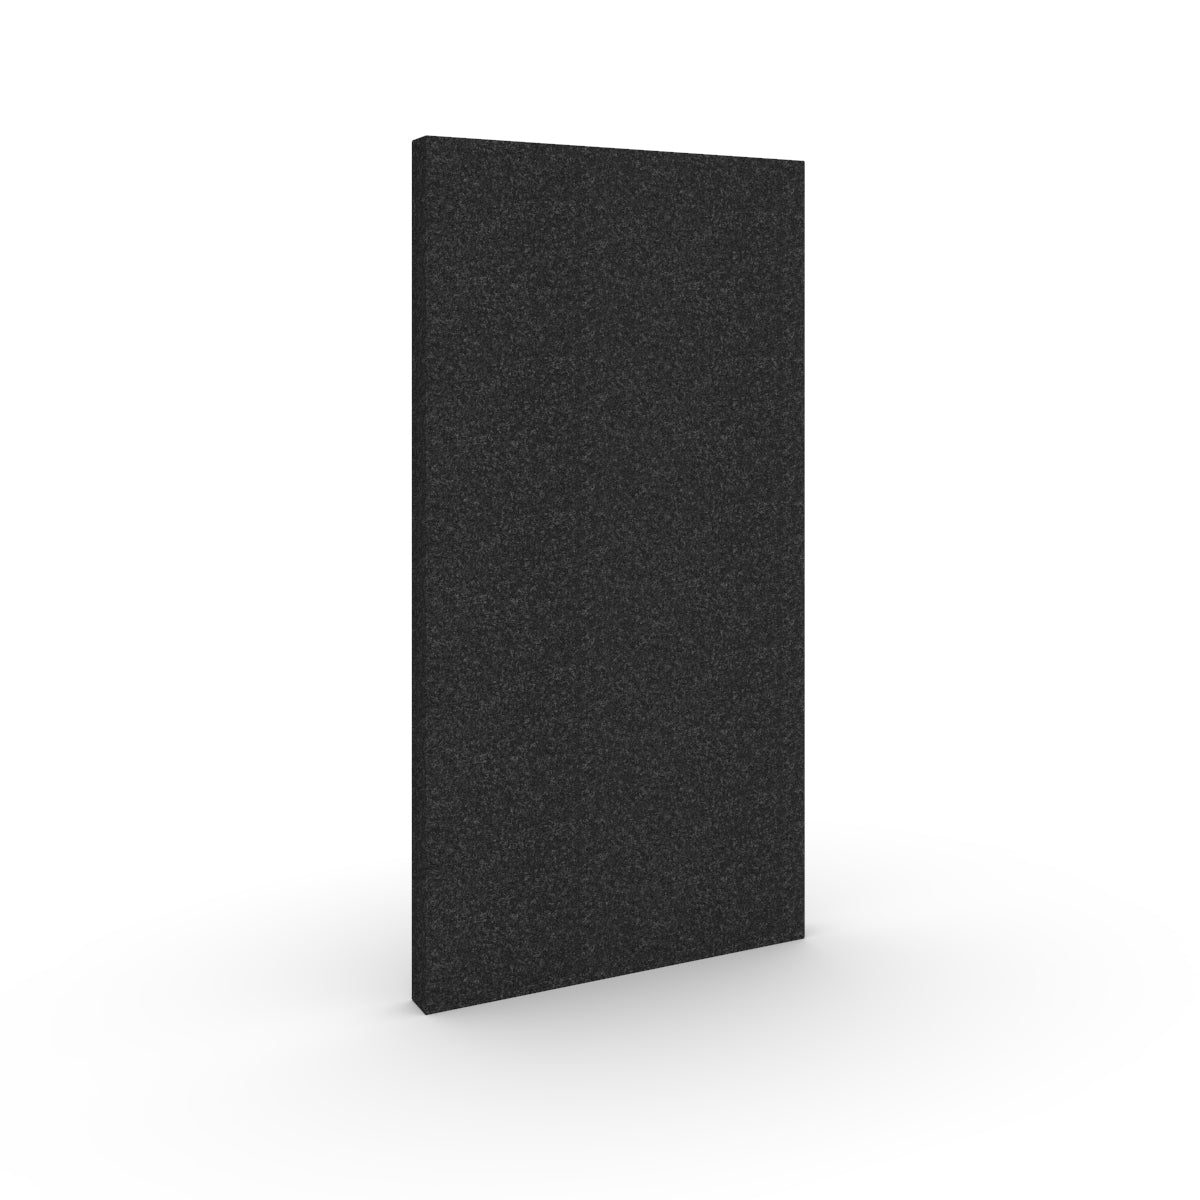 Basic wall sound absorber in black melange acoustic wool felt textile. Size 58cmx116cm. Akustikkplater og lyddemping vegg